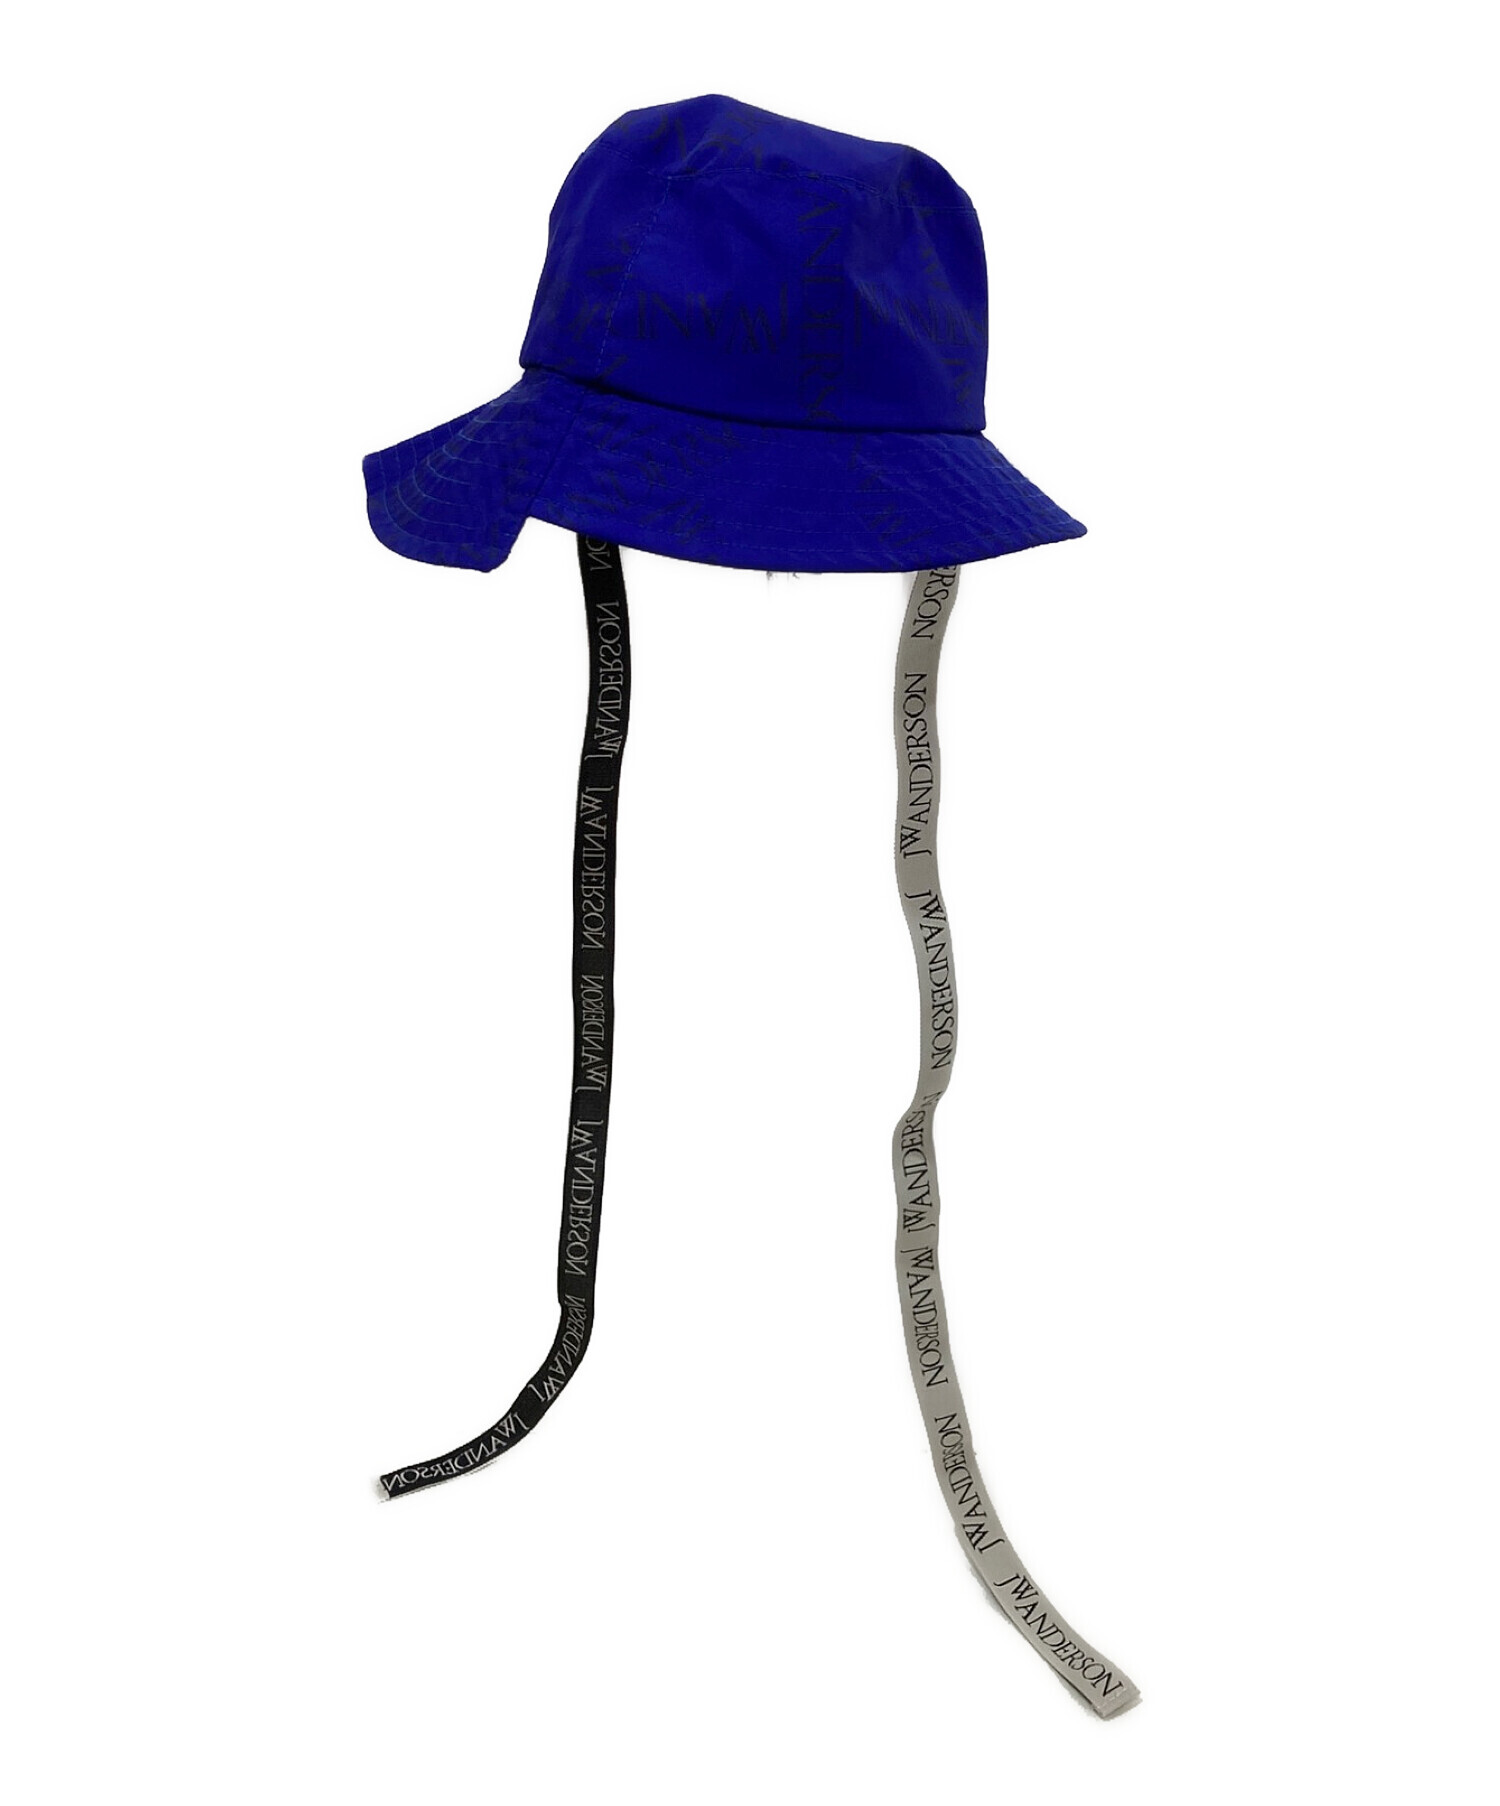 JW ANDERSON 帽子 サイズ56